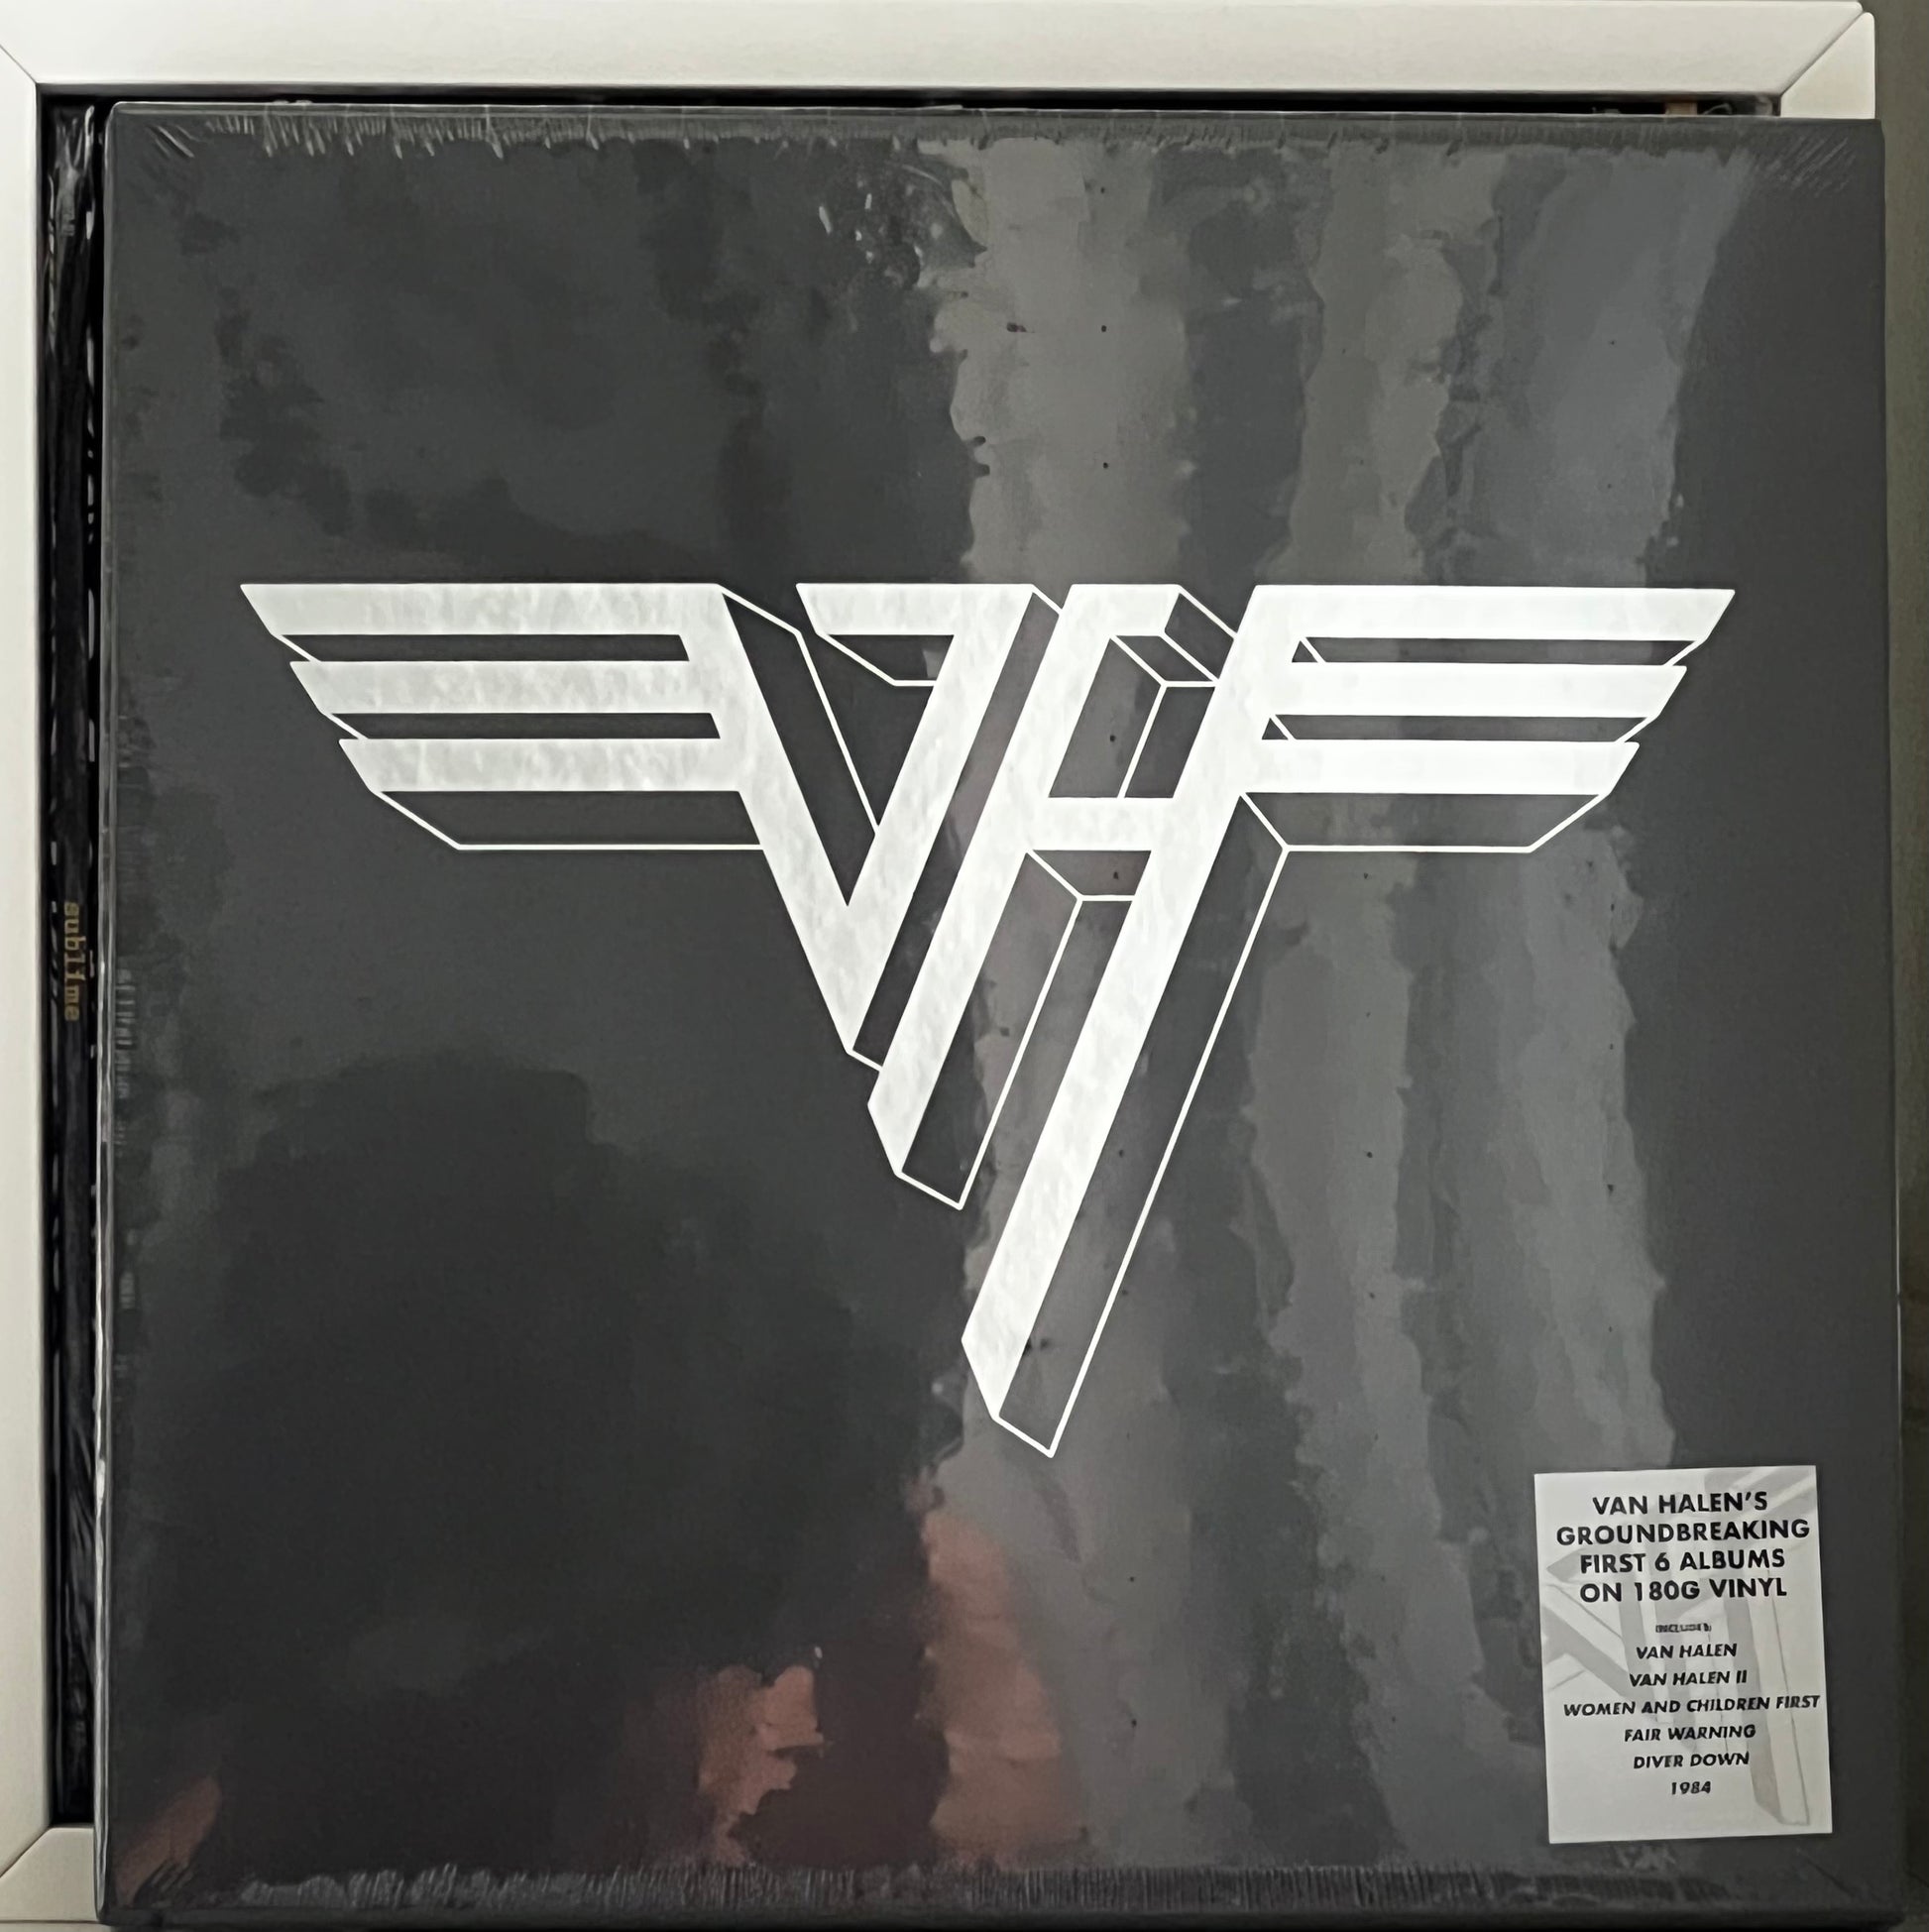 Van Halen - Fair Warning (180g Vinyl LP)